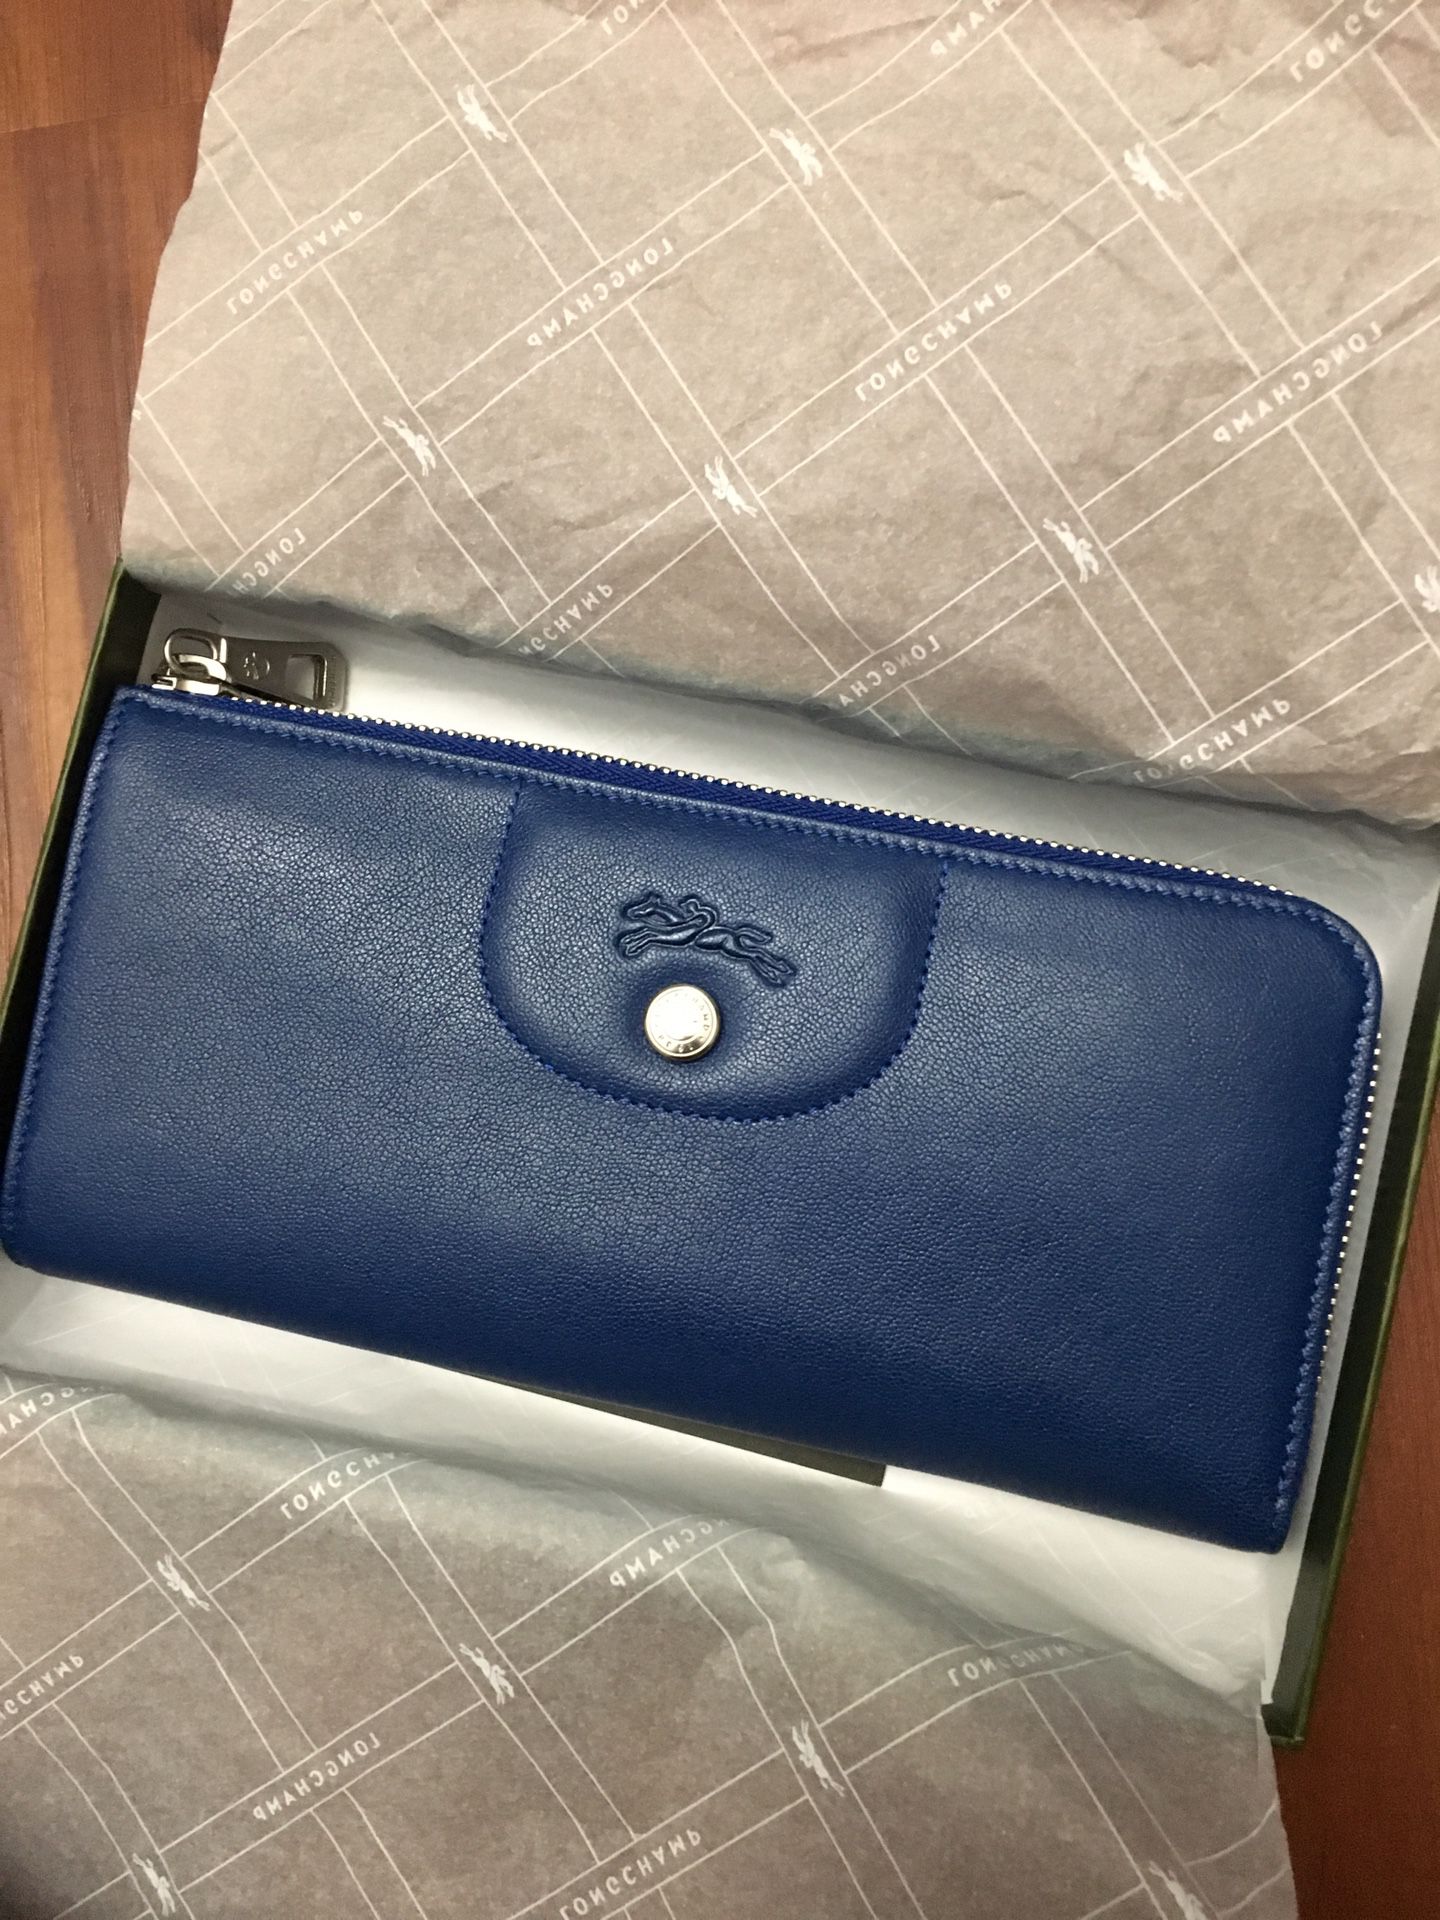 Brand new Longchamp wallet